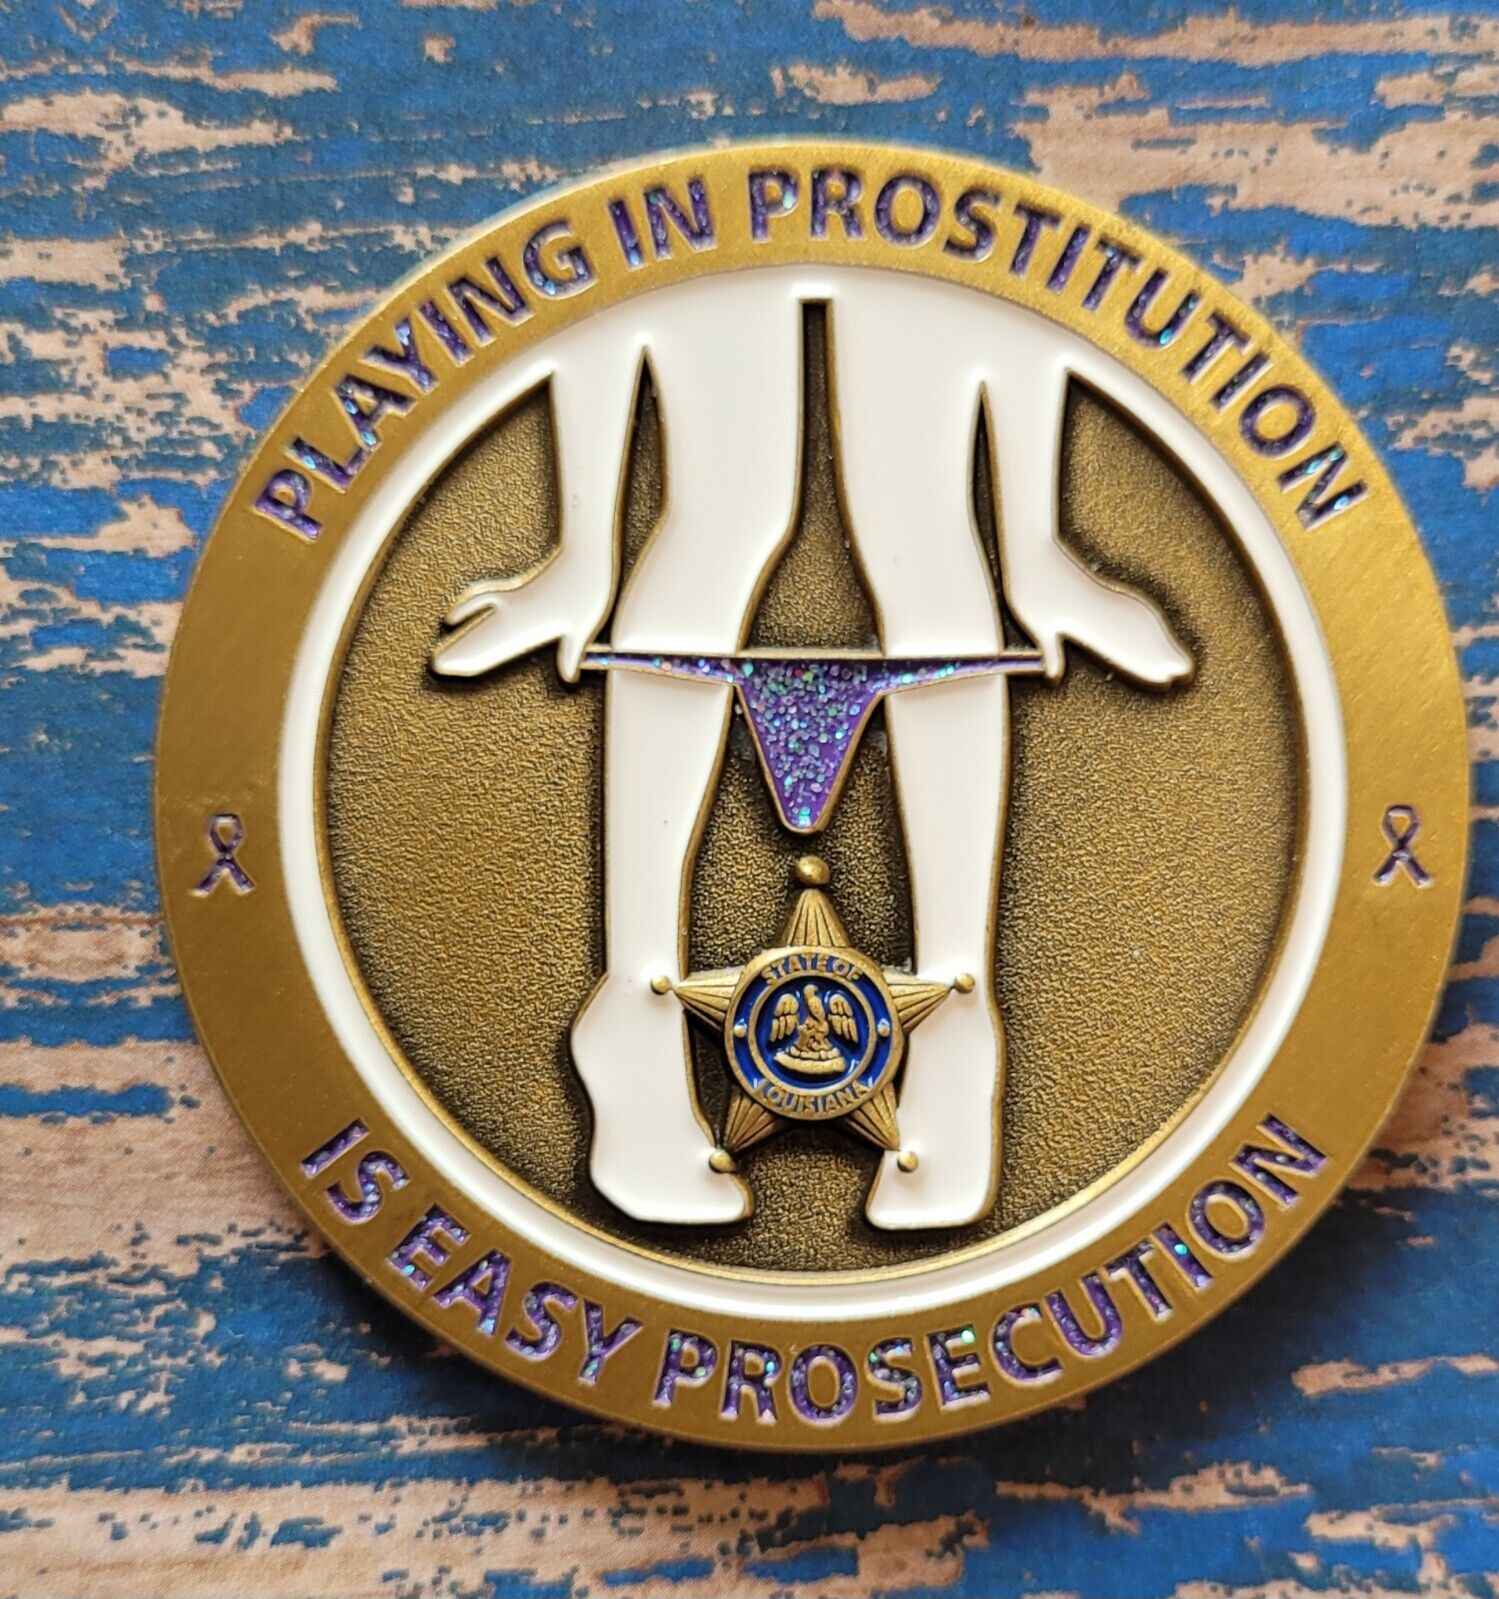  Mardi Gras Prostitution Enforcement Challenge Coin ULTRA RARE (2023)